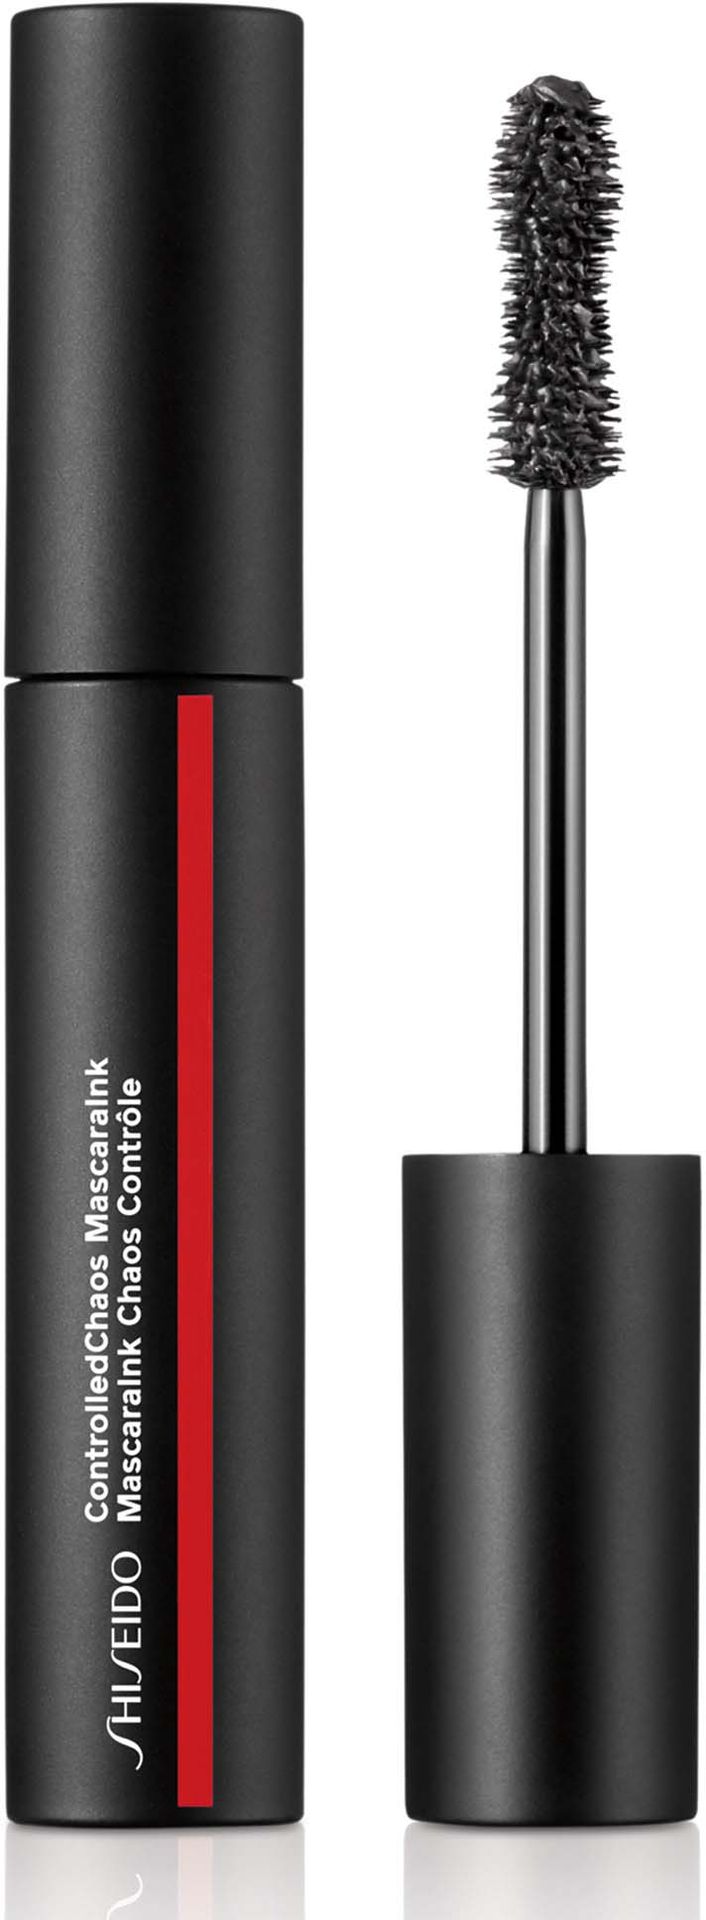 Shiseido Tusz do rzęs Mascara Ink 01 Black